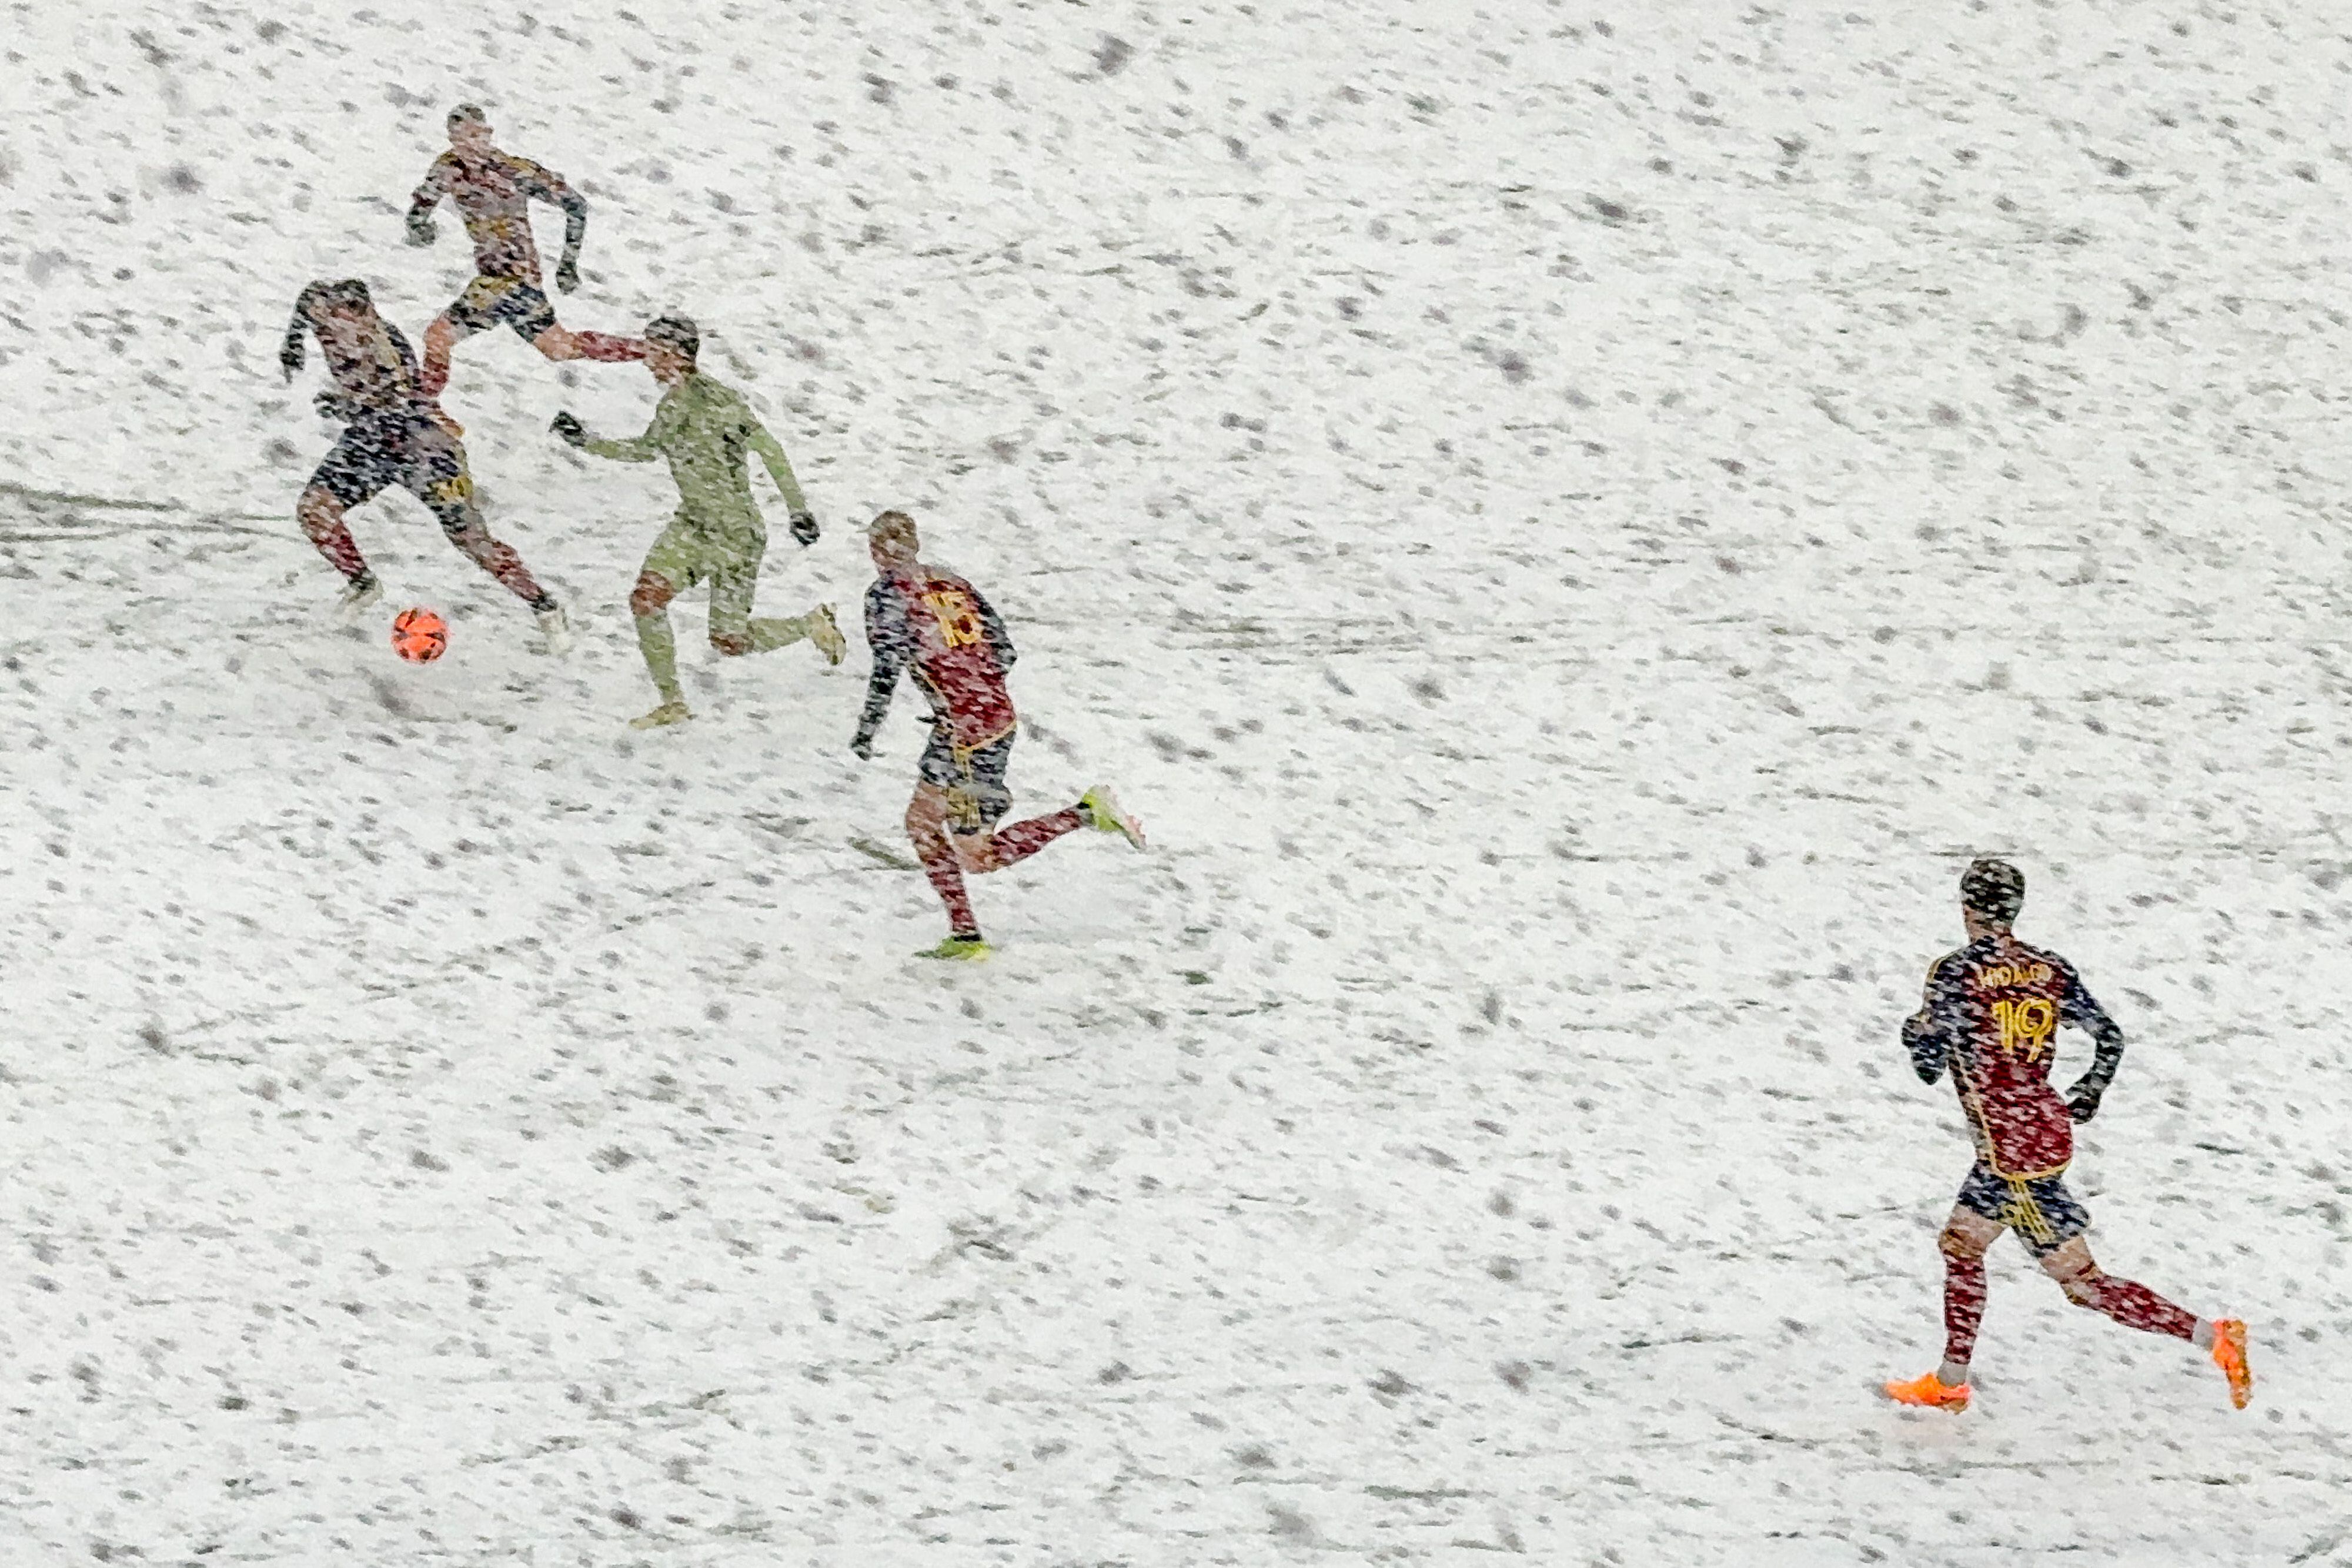 LAFC coach Steve Cherundolo says snow game vs. RSL was a disgrace.